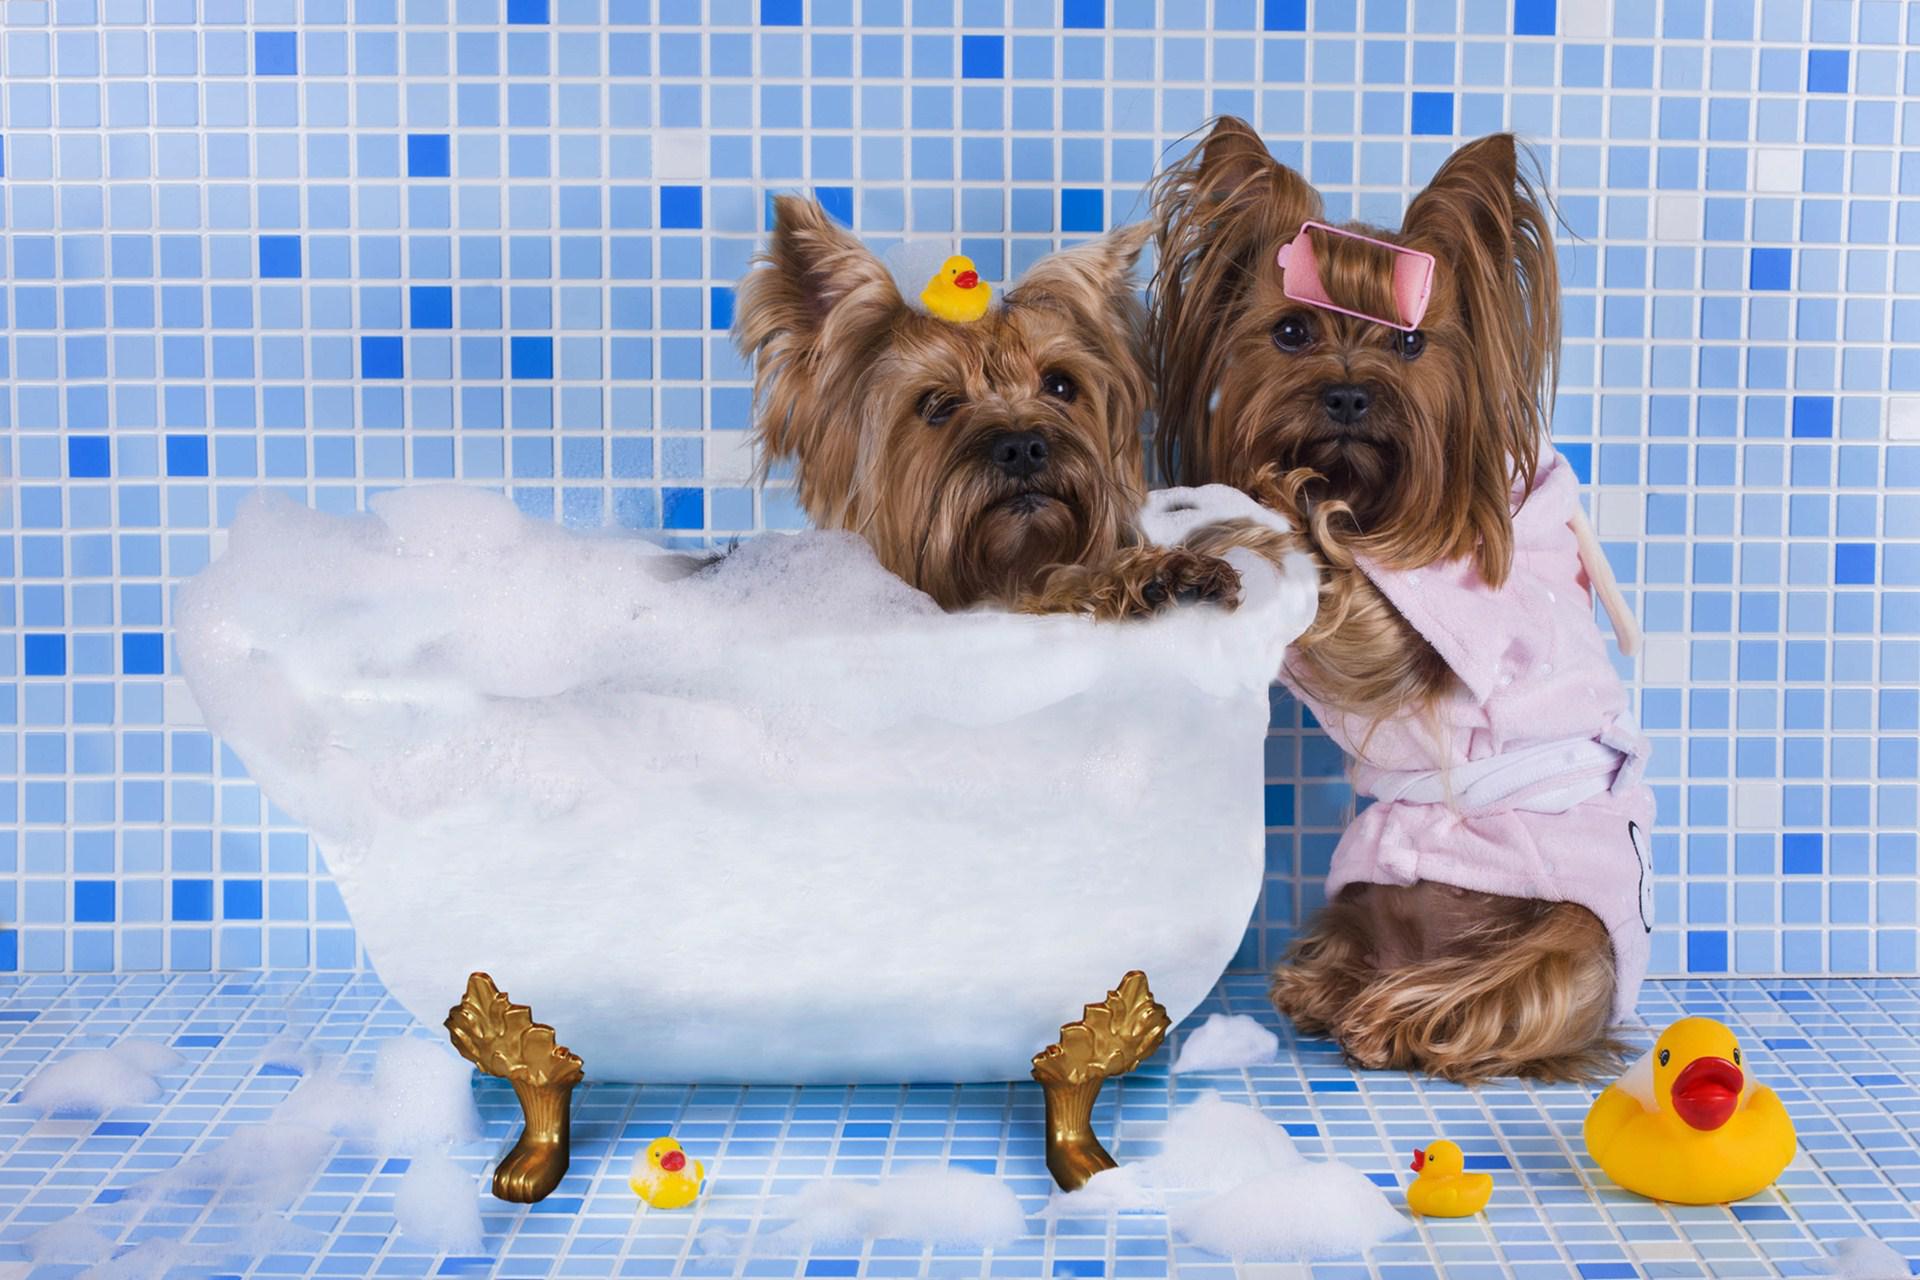 Hd Dog Bathing Funny Wallpaper - Dog Bath 1080p - HD Wallpaper 